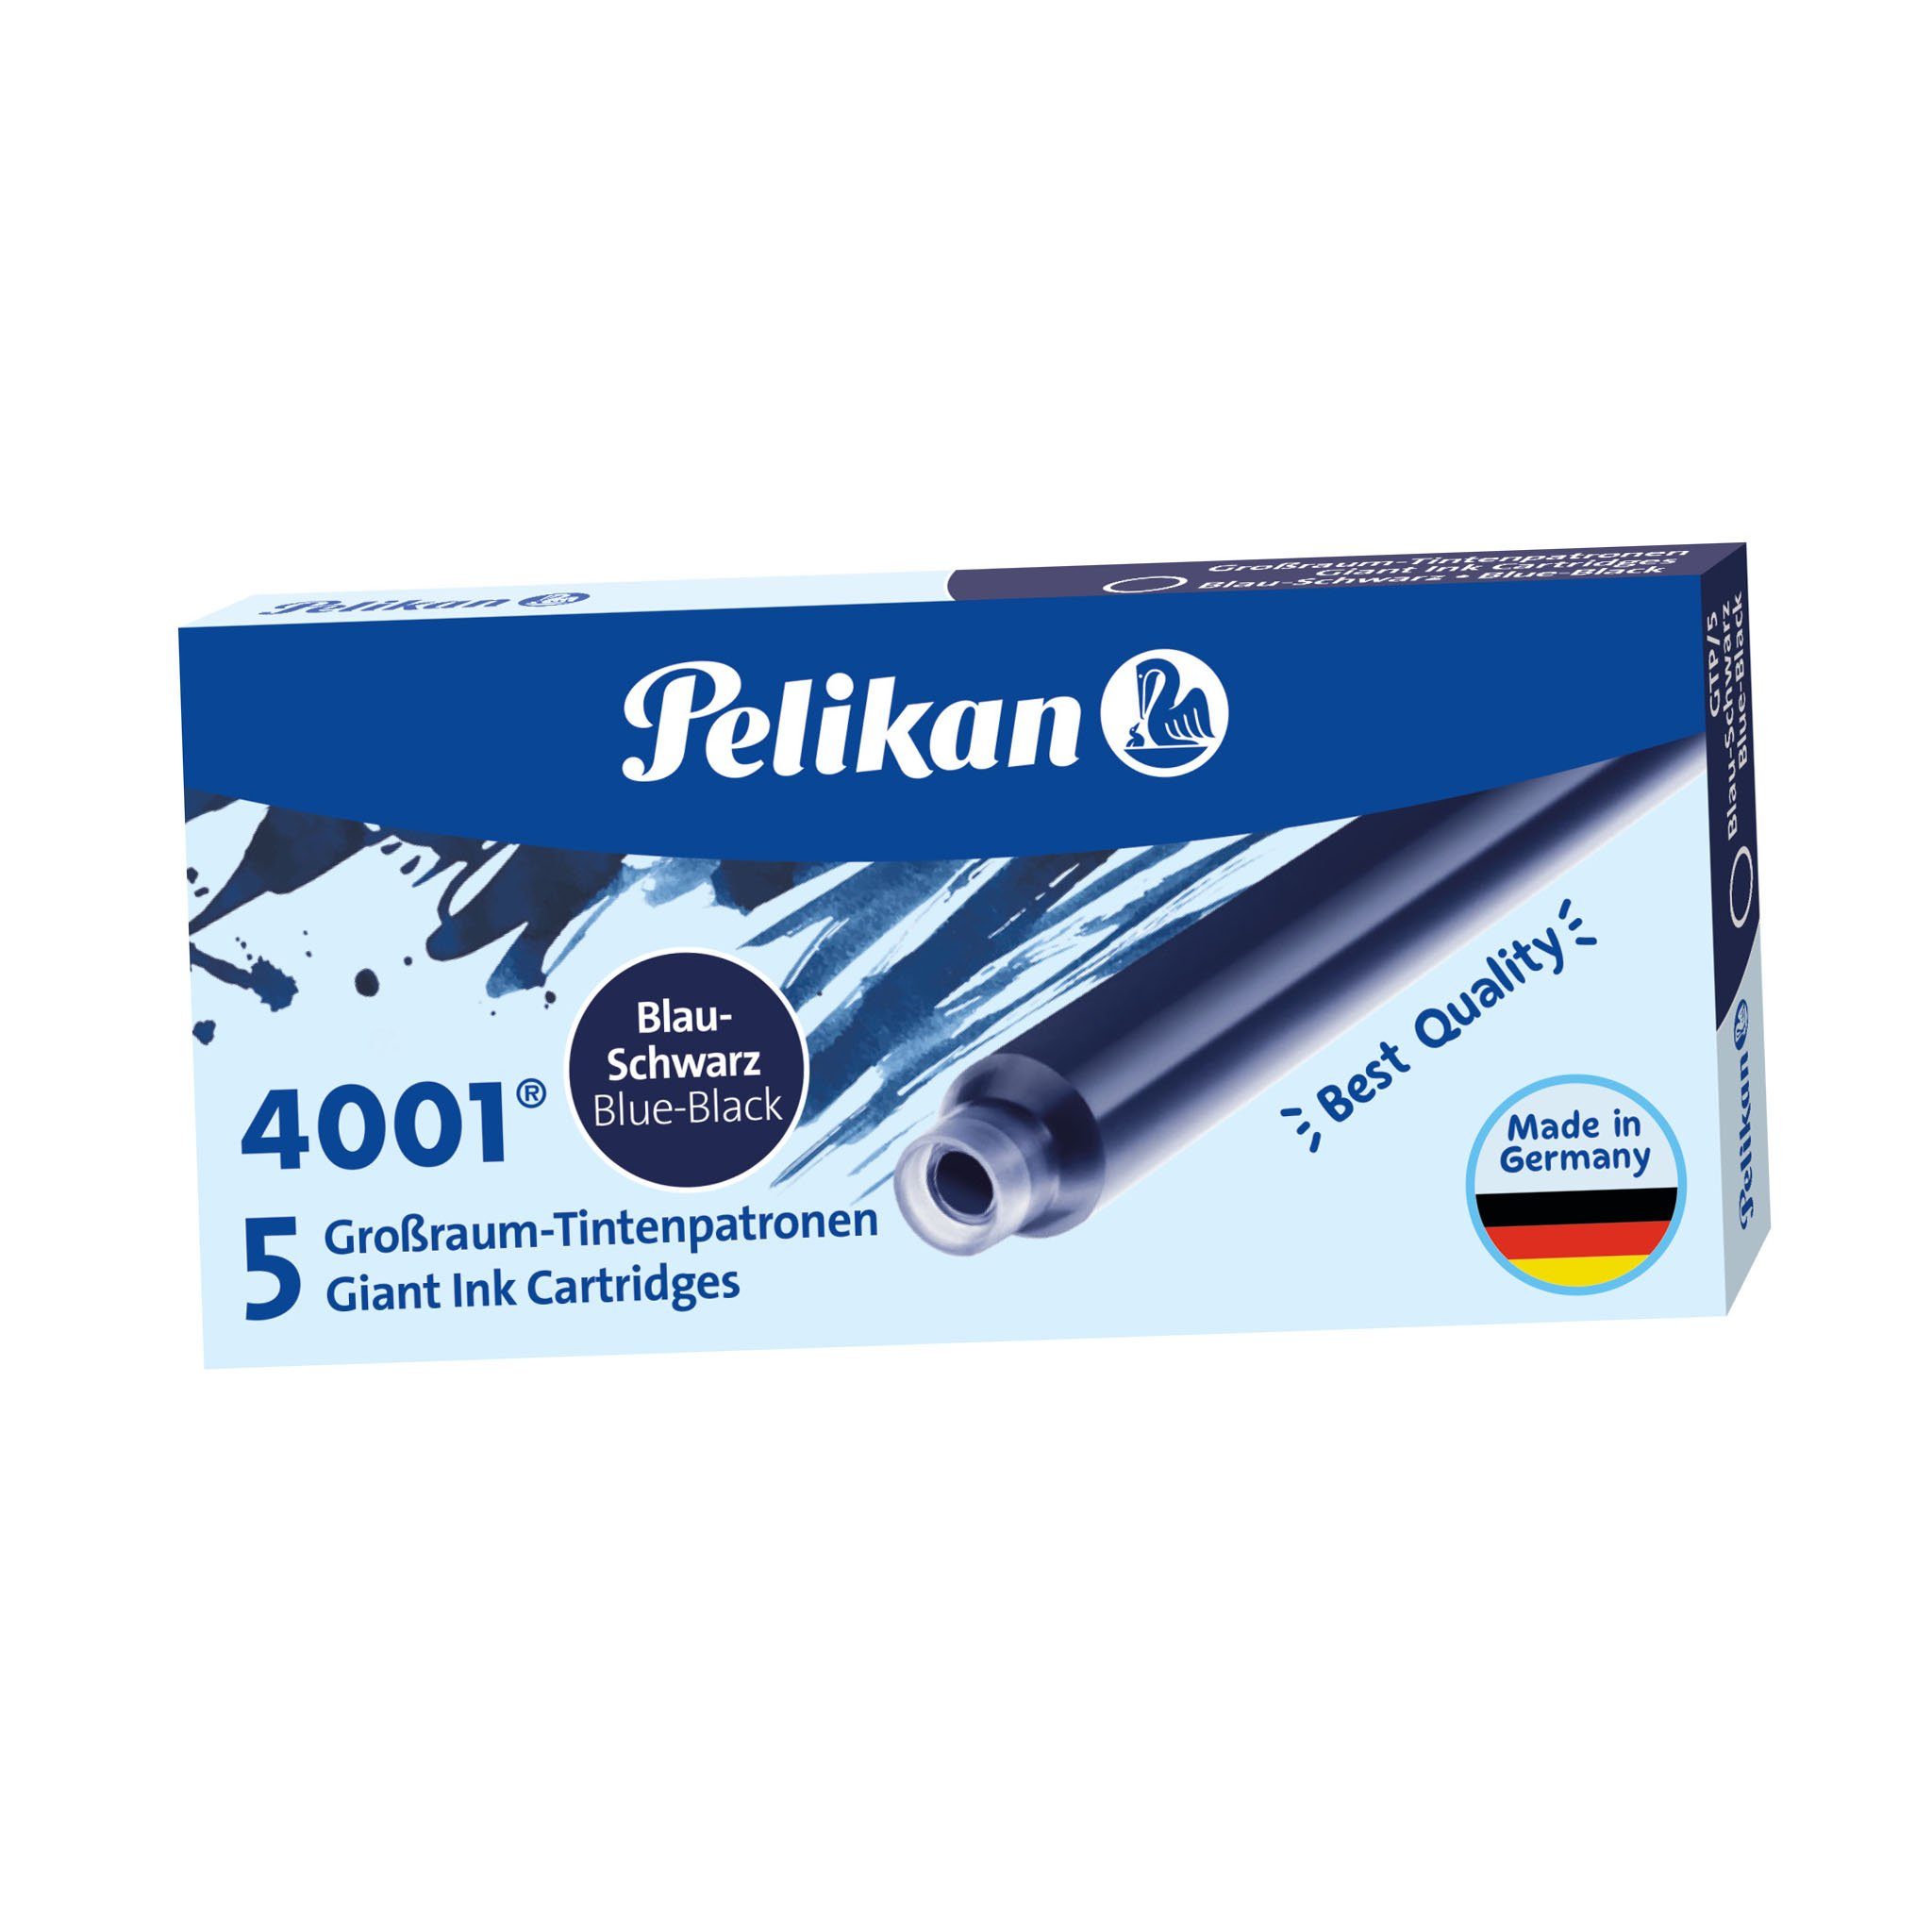 Pelikan Füllfederhalter Pelikan Großraum-Tintenpatronen 4001 GTP/5, blau- schwarz